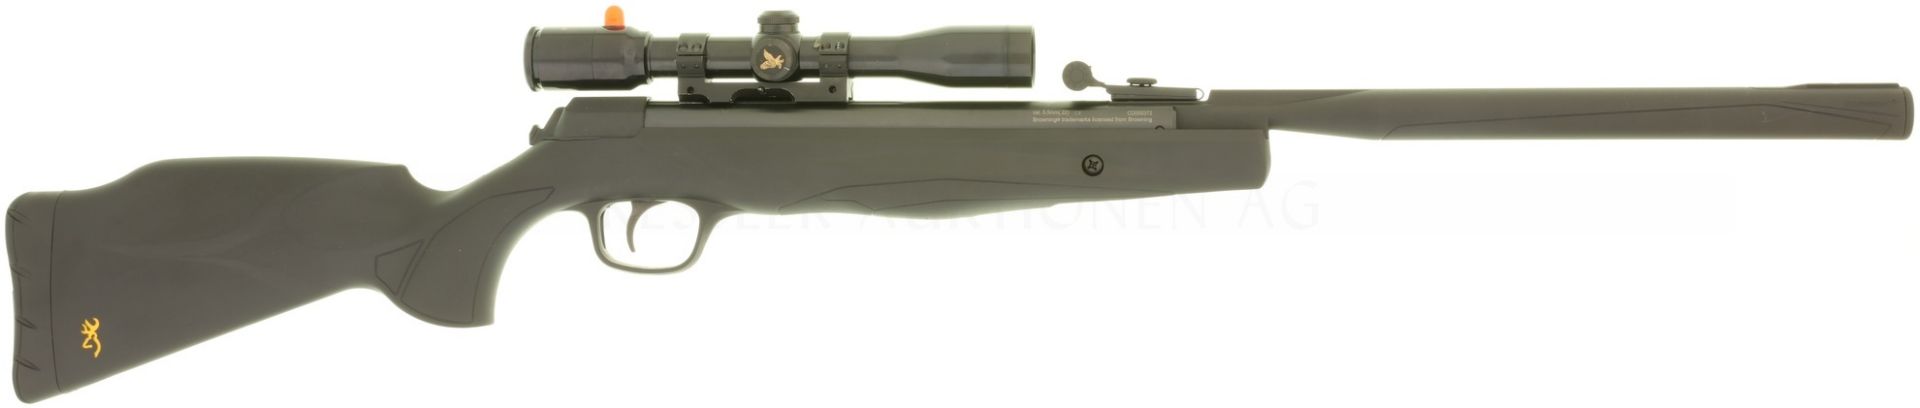 Luftgewehr, Browning X-Blade, Kal. 5.5mm